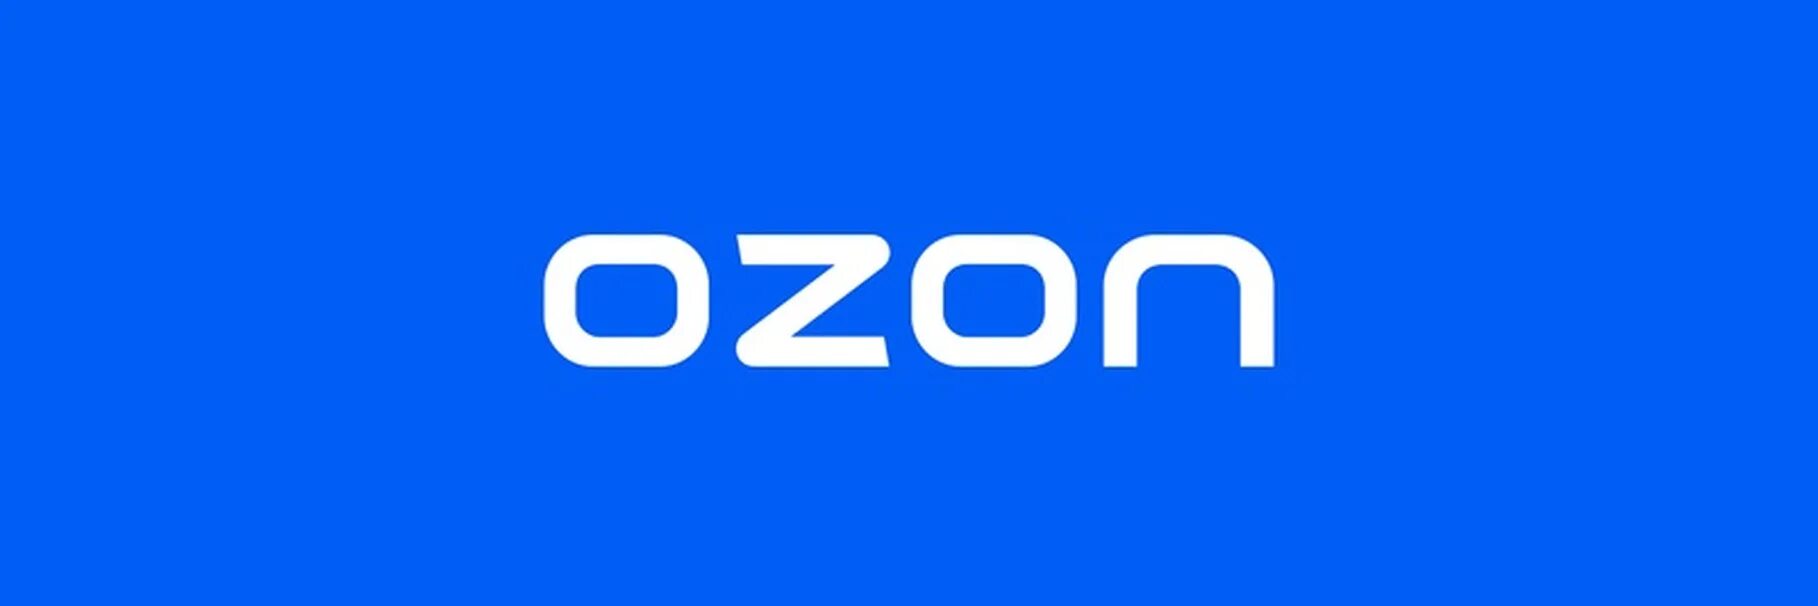 Купить на озоне беларусь. OZON. OZON логотип. Надпись Озон. Логотип Озон квадратный.